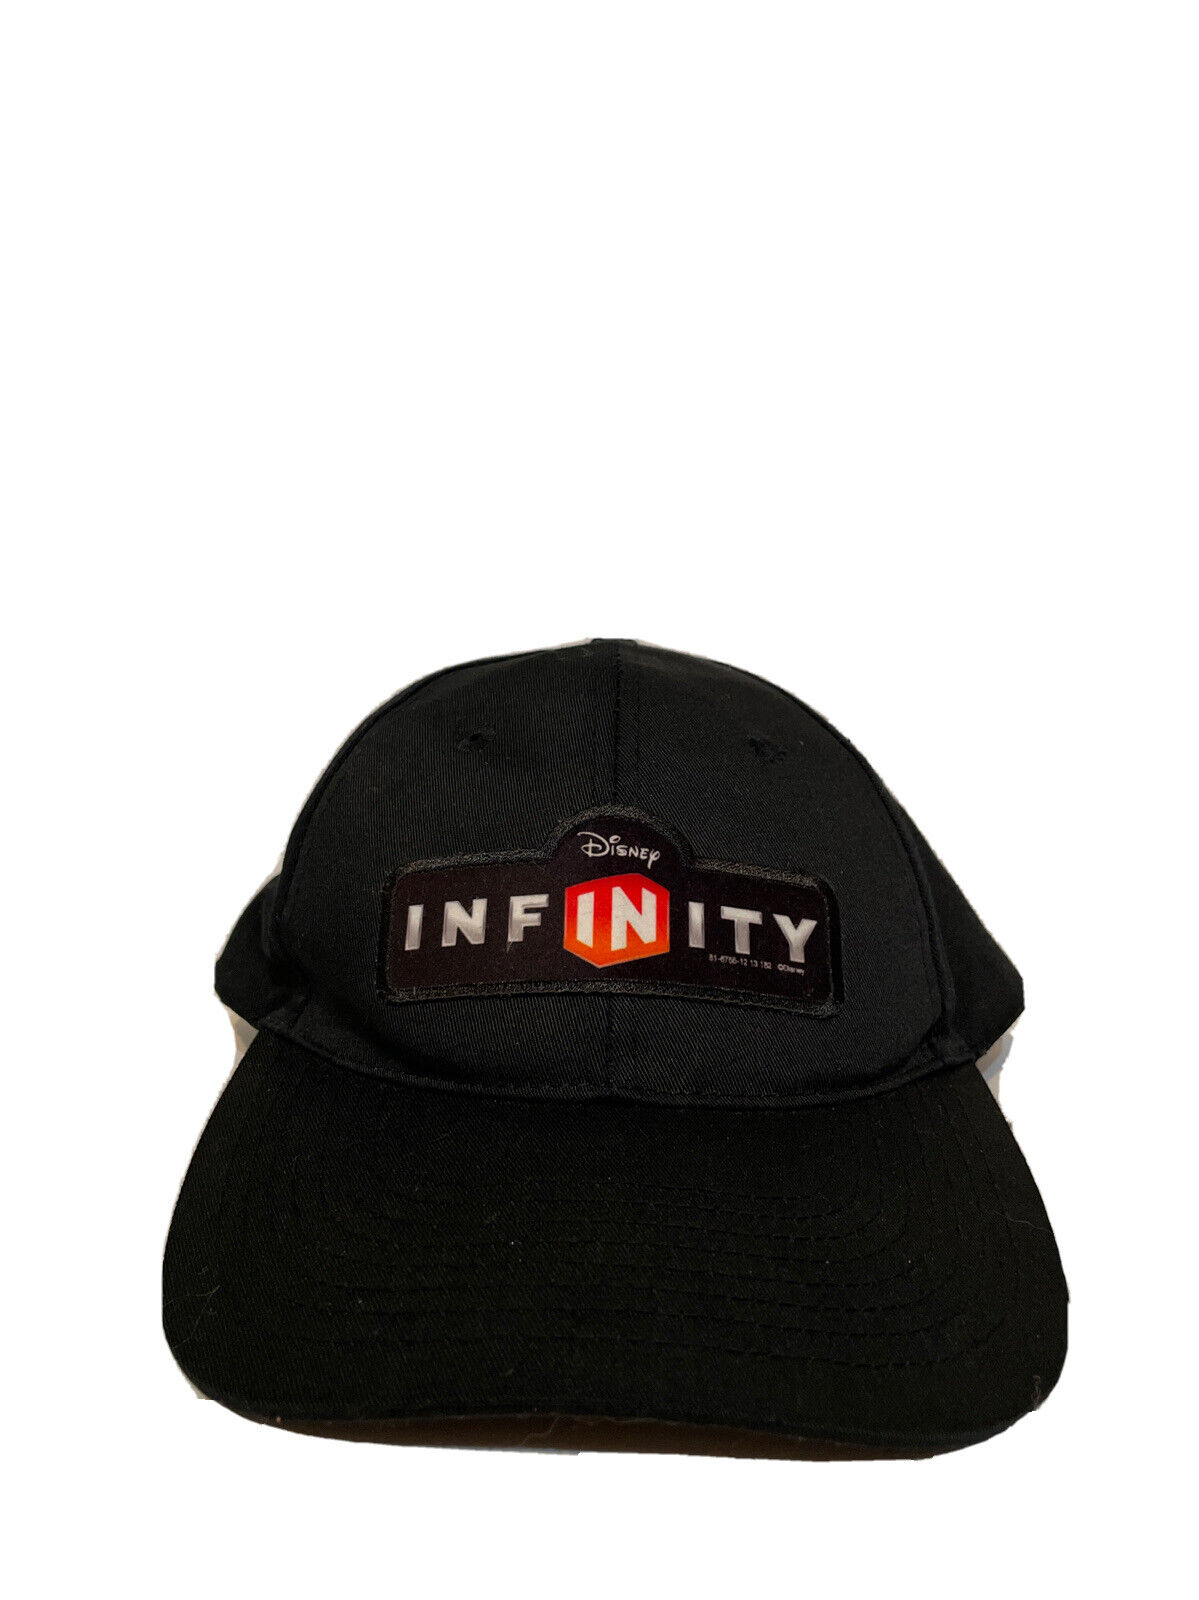 Disney Infinity Black Adjustable Hat Cap Embroidered